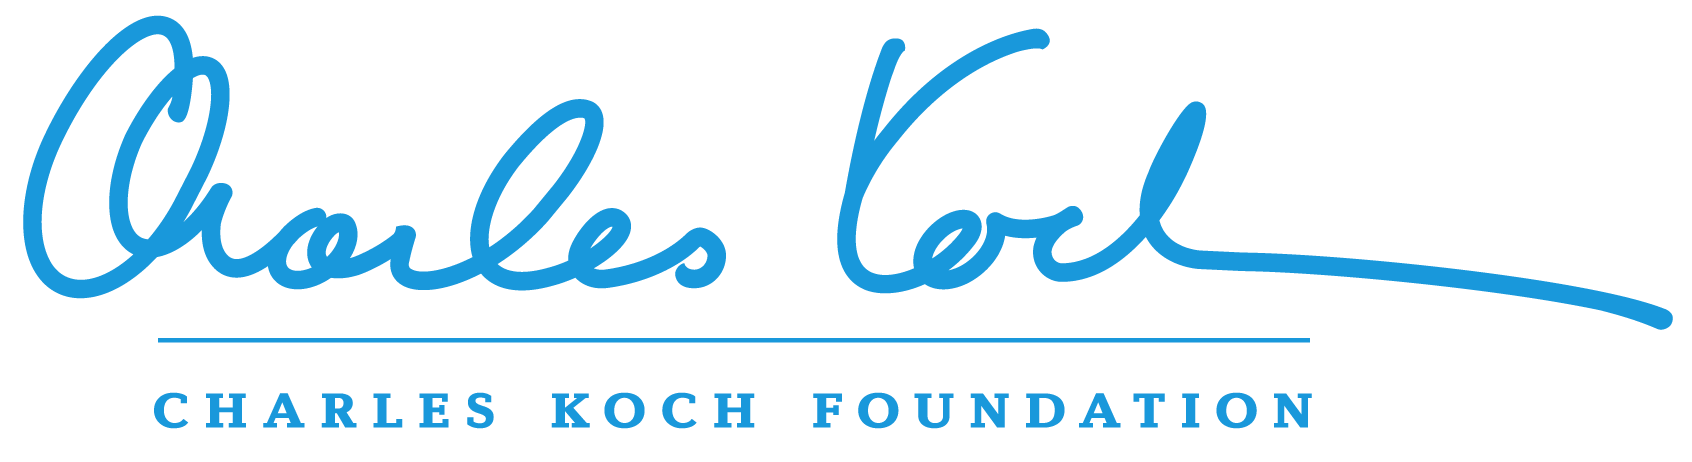 Charles Koch Foundation logo